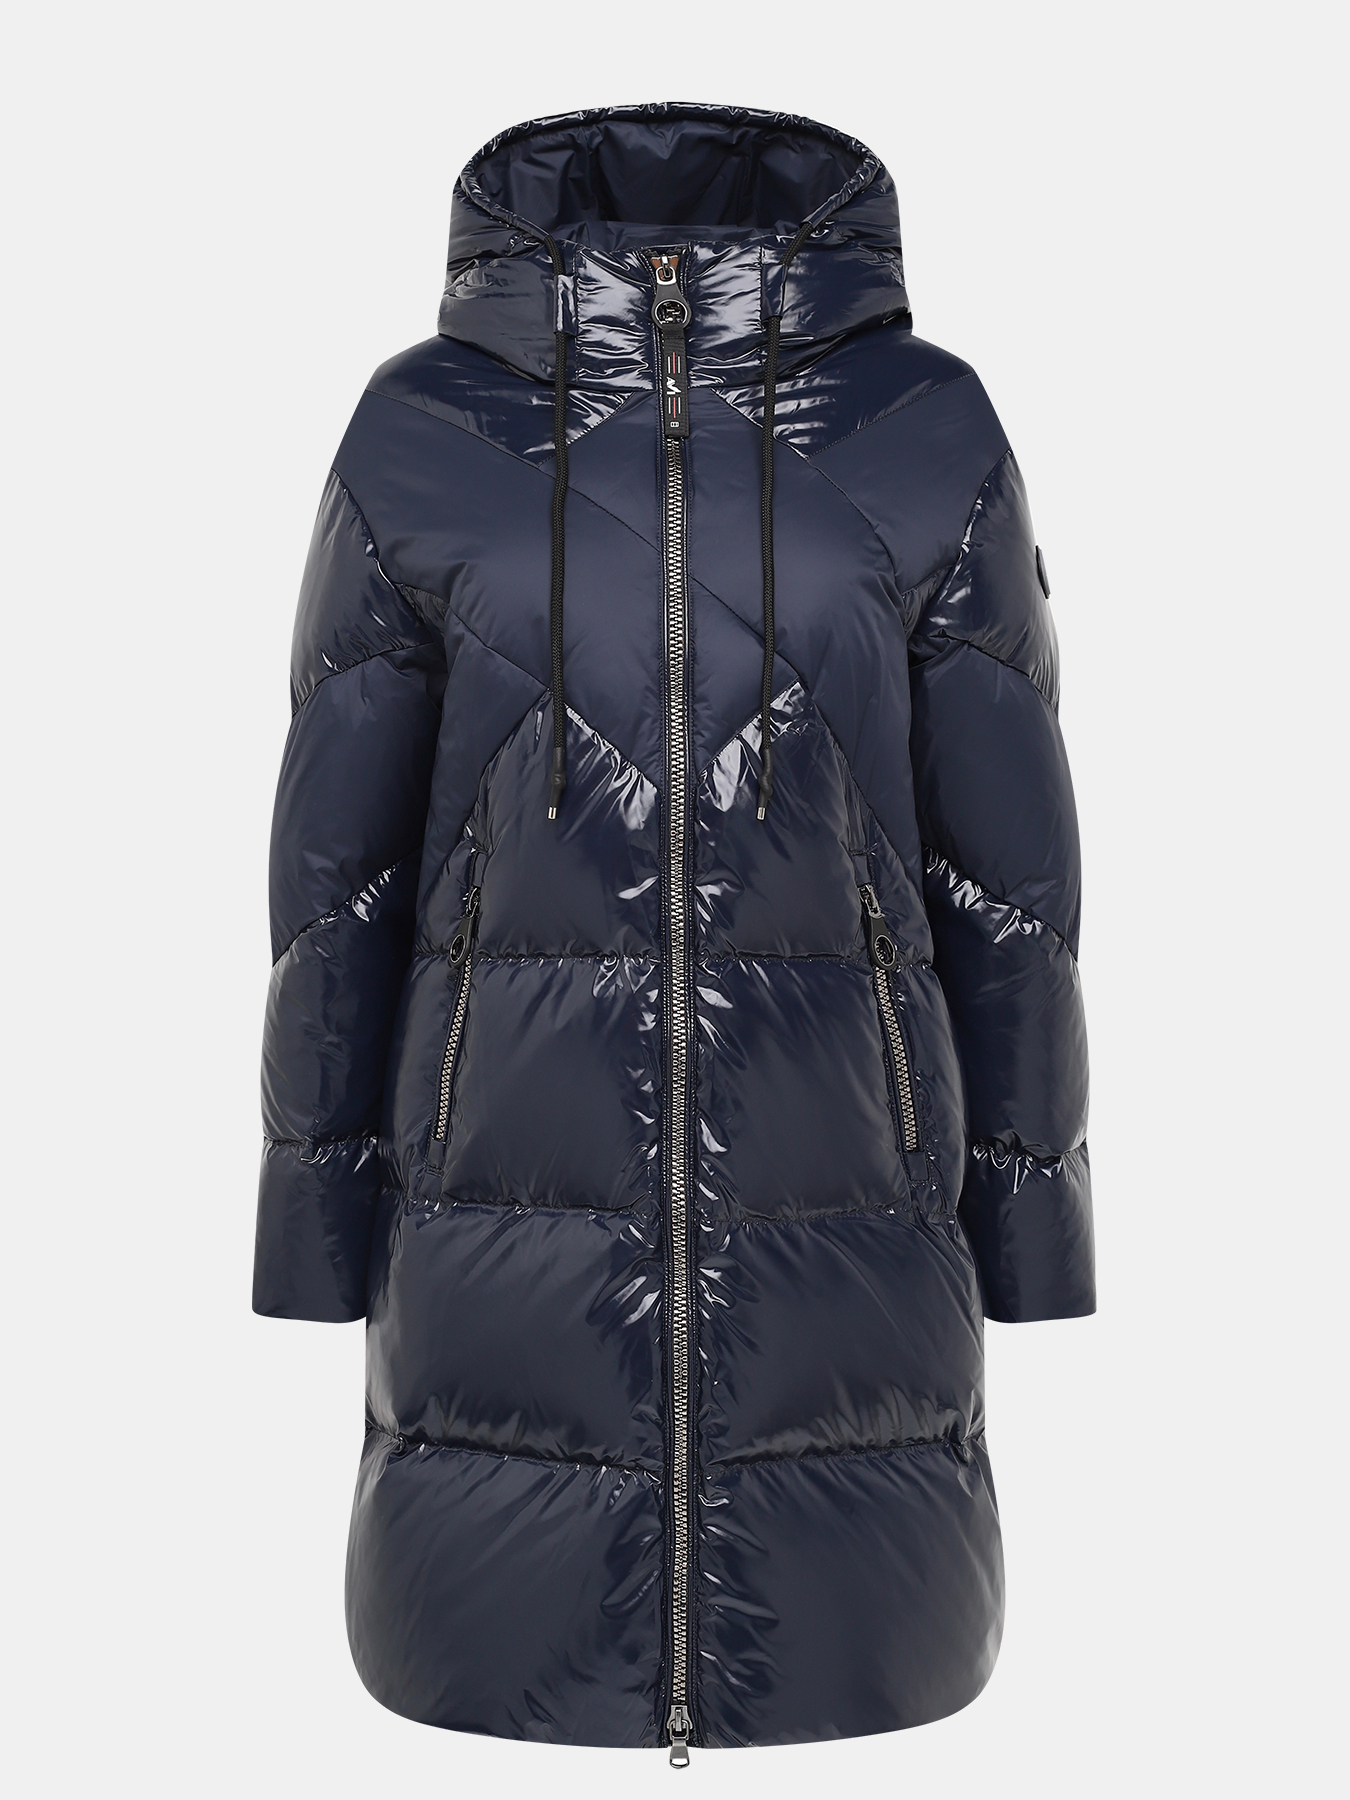 Пальто зимнее AVI 433522-022, цвет темно-синий, размер 48 - фото 1